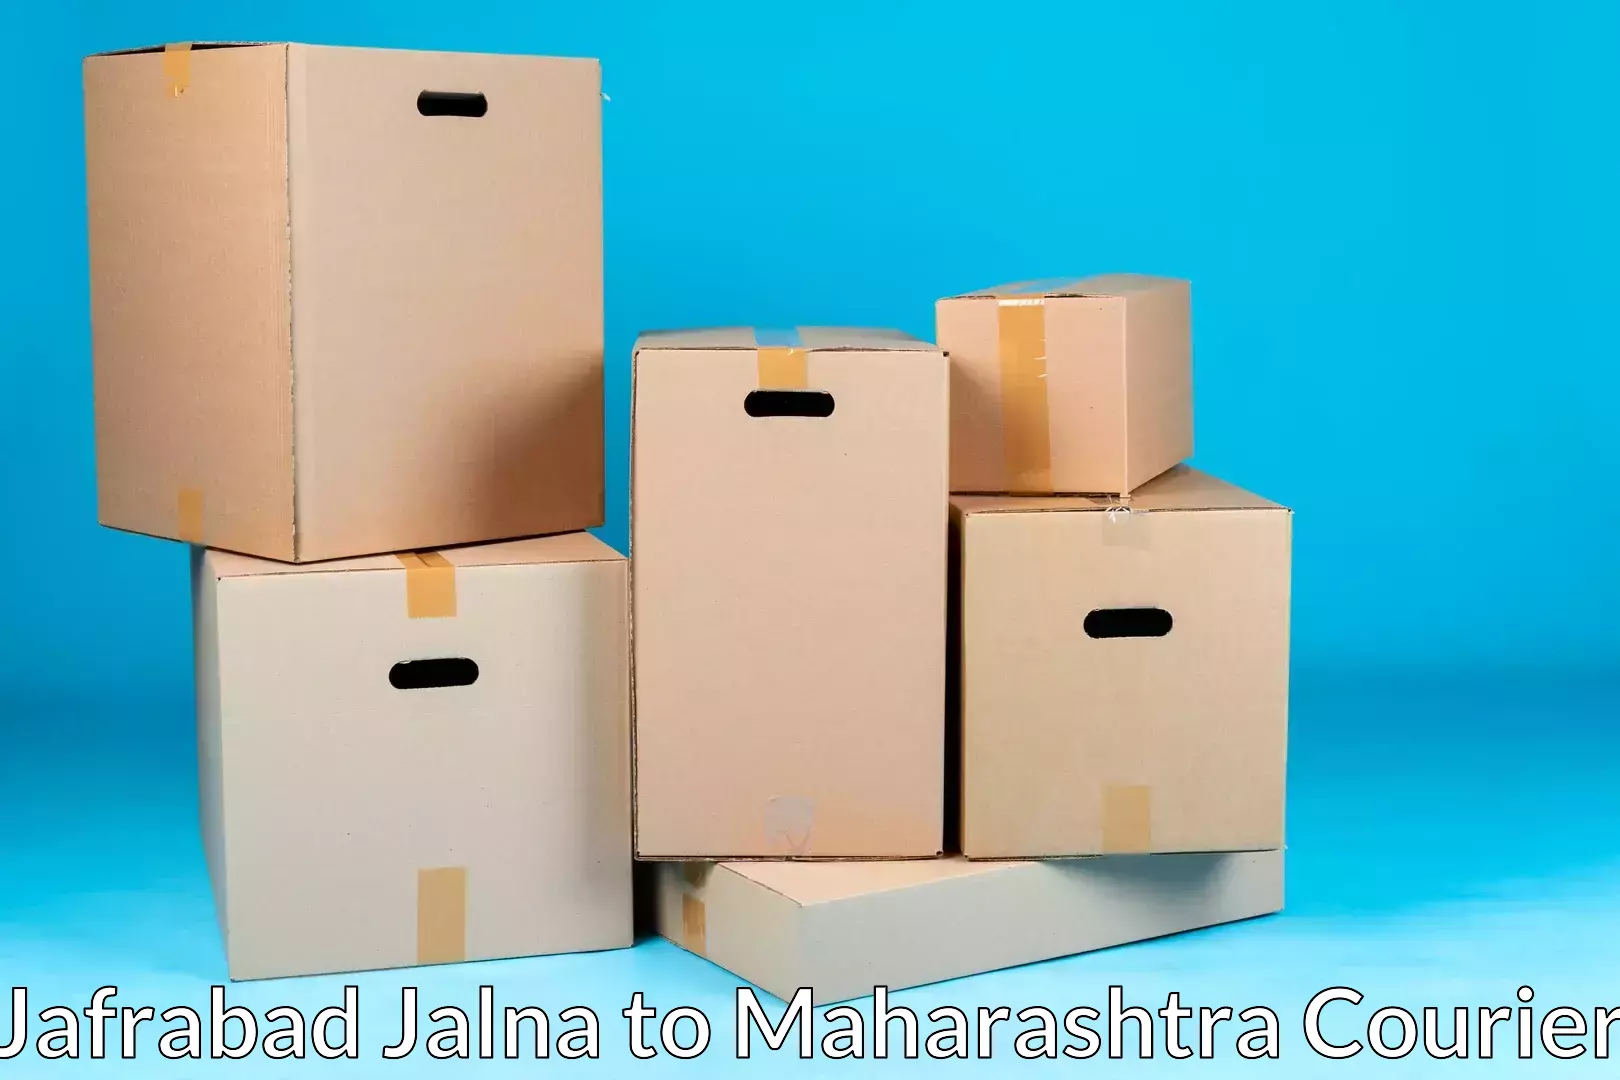 Trusted relocation experts Jafrabad Jalna to Jalna